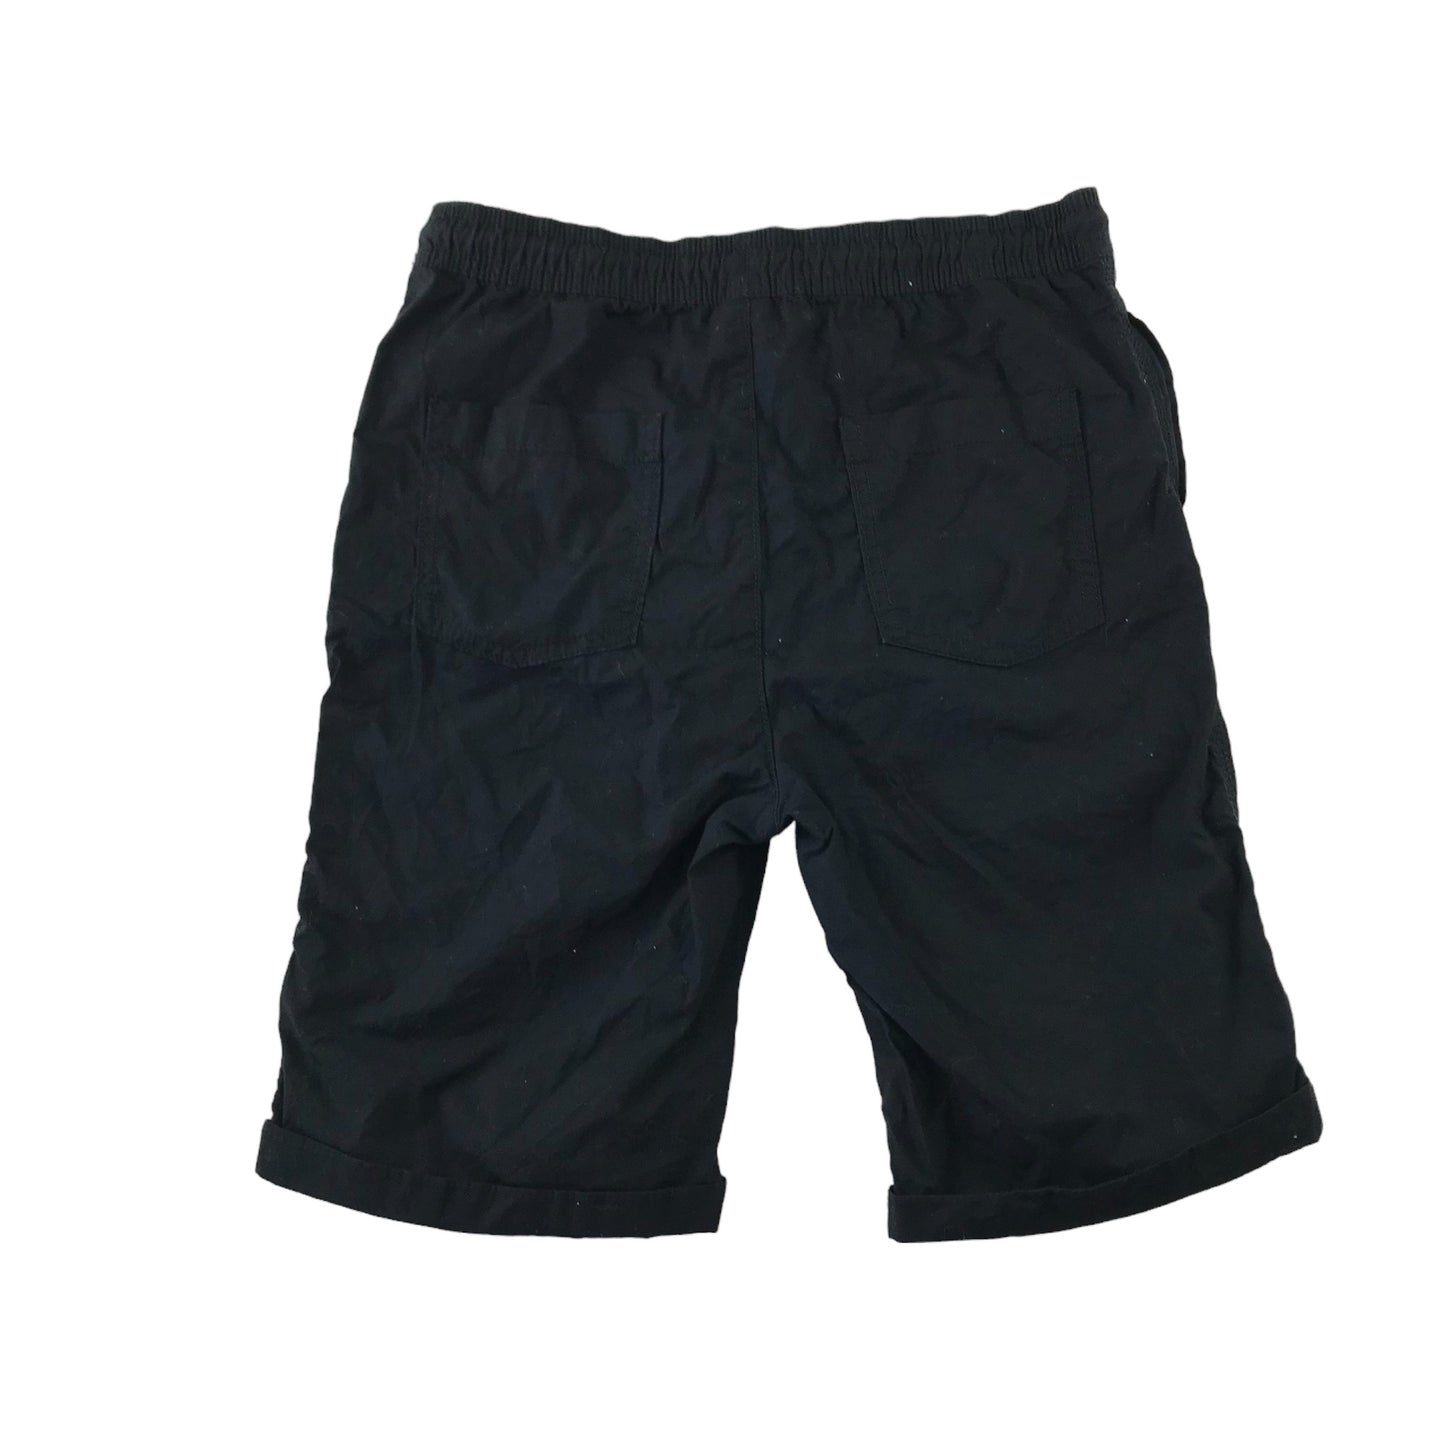 Tu Shorts Bundle Age 11 Plain Black and Tiger Floral Print Shorts Pull Up Cotton